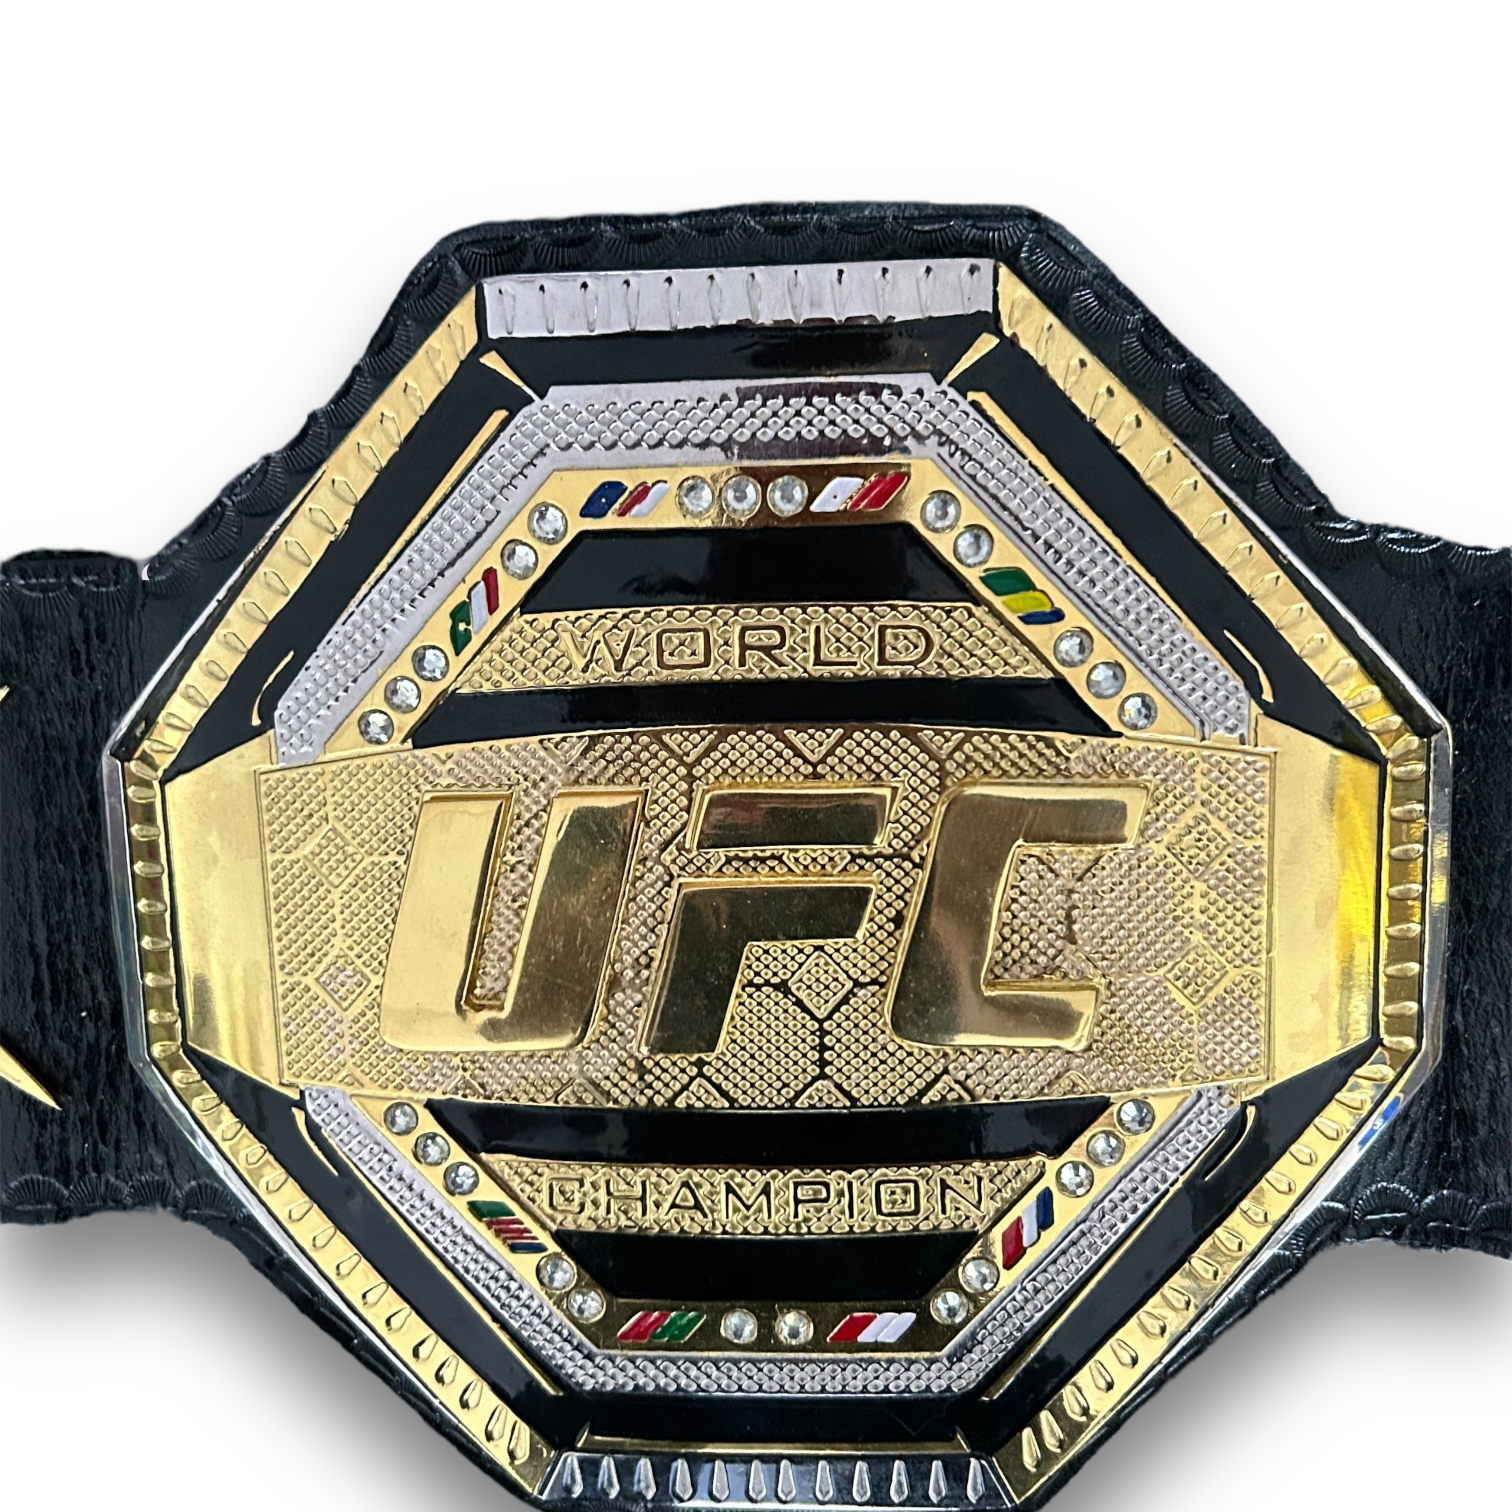 JON ‘BONES’ JONES SIGNED UFC BELT AUTOGRAPH FULL SCALE CHAMPION BELT (AFTAL COA)